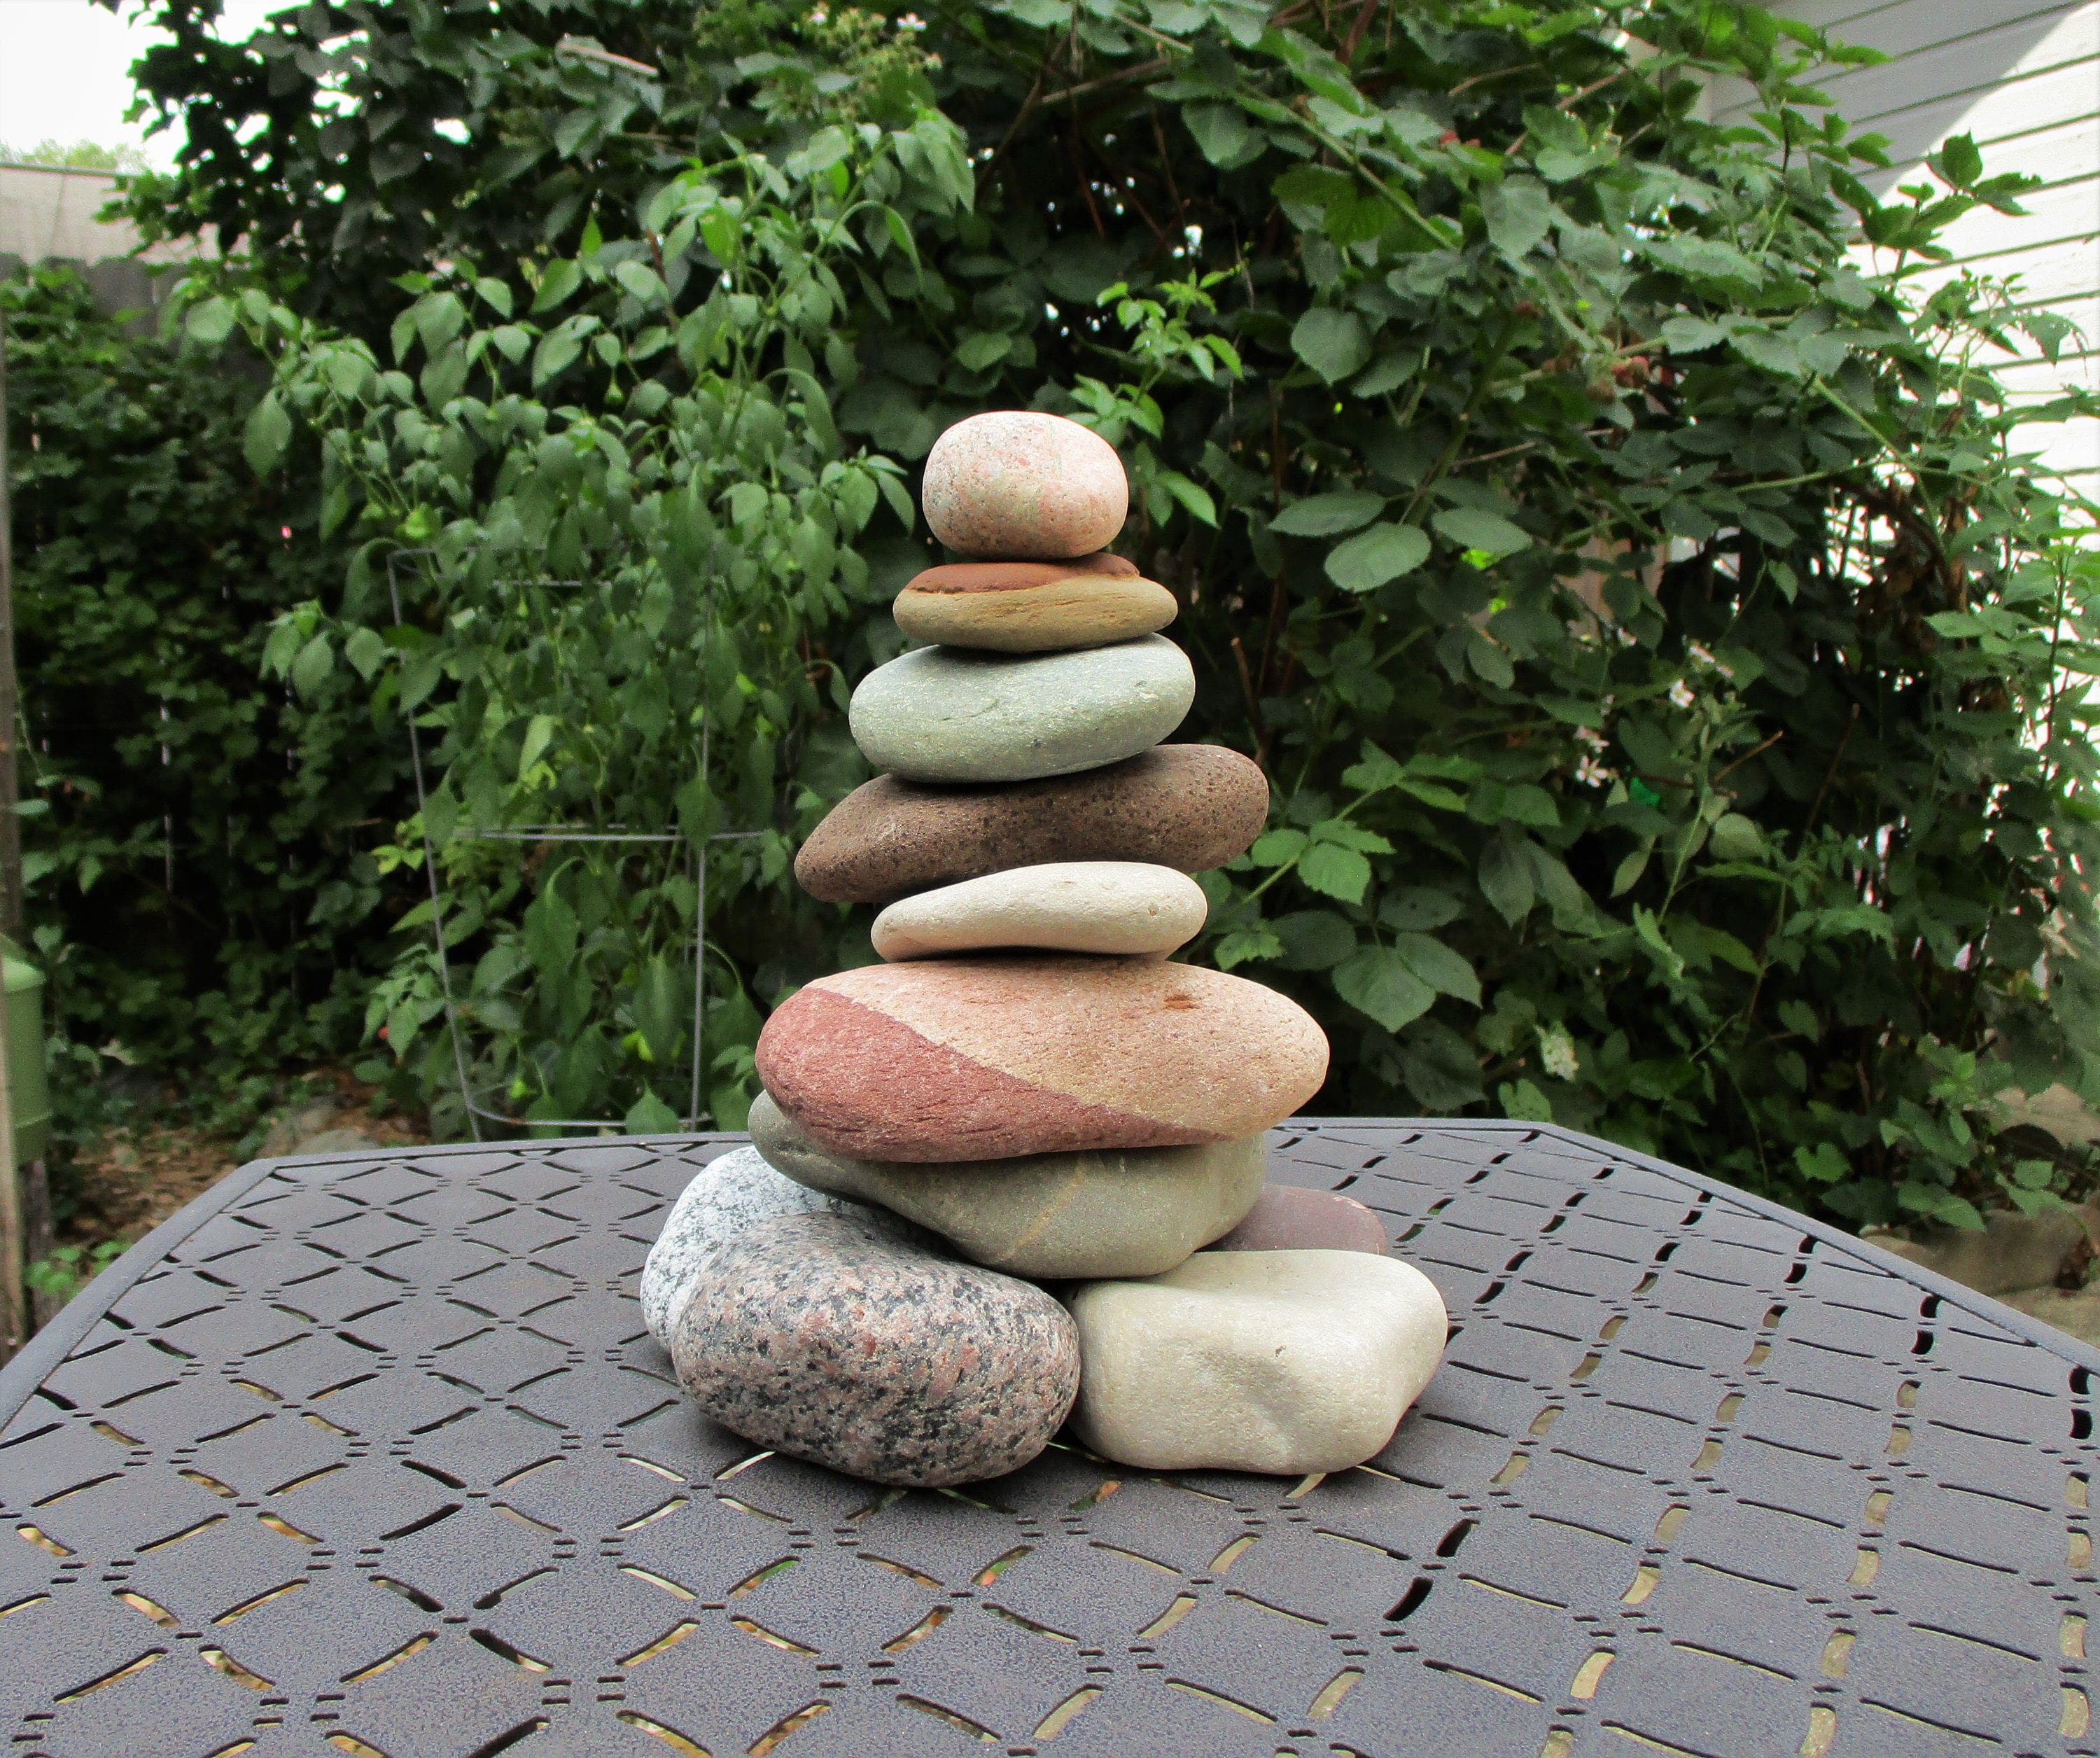 DIY : Rock Stacks (Cairns) – The Art of Nature